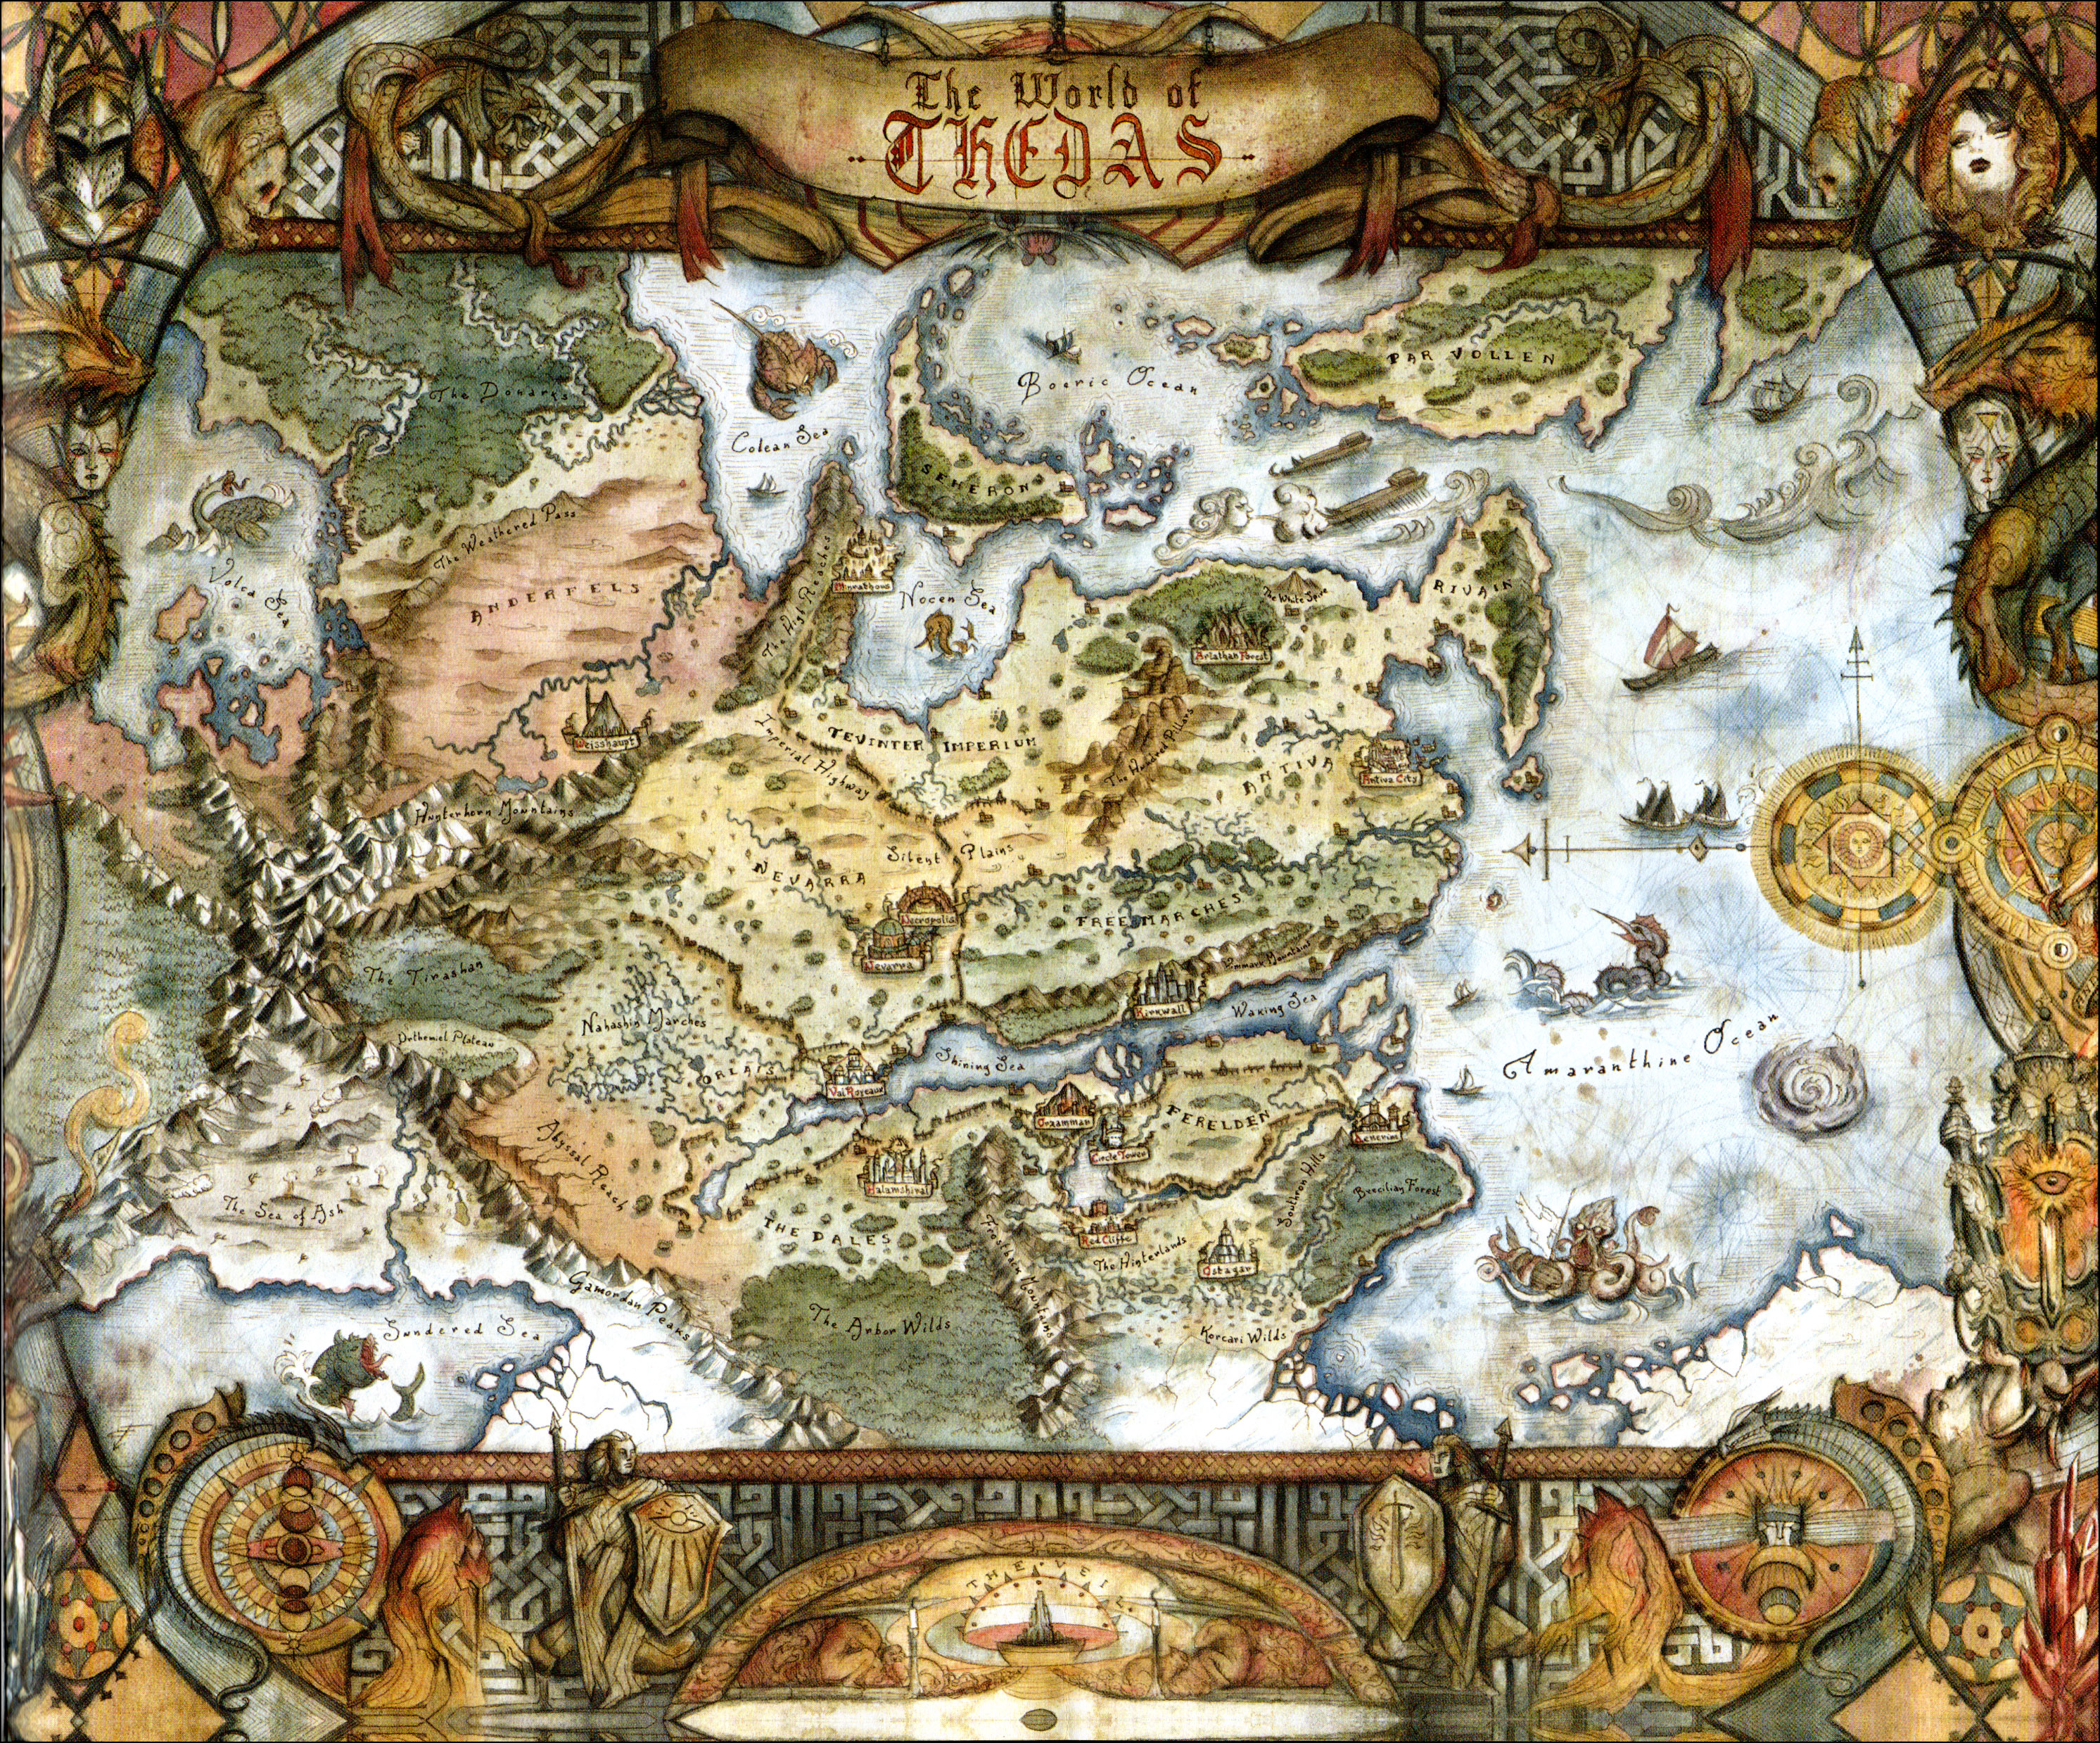 dragon age origins map